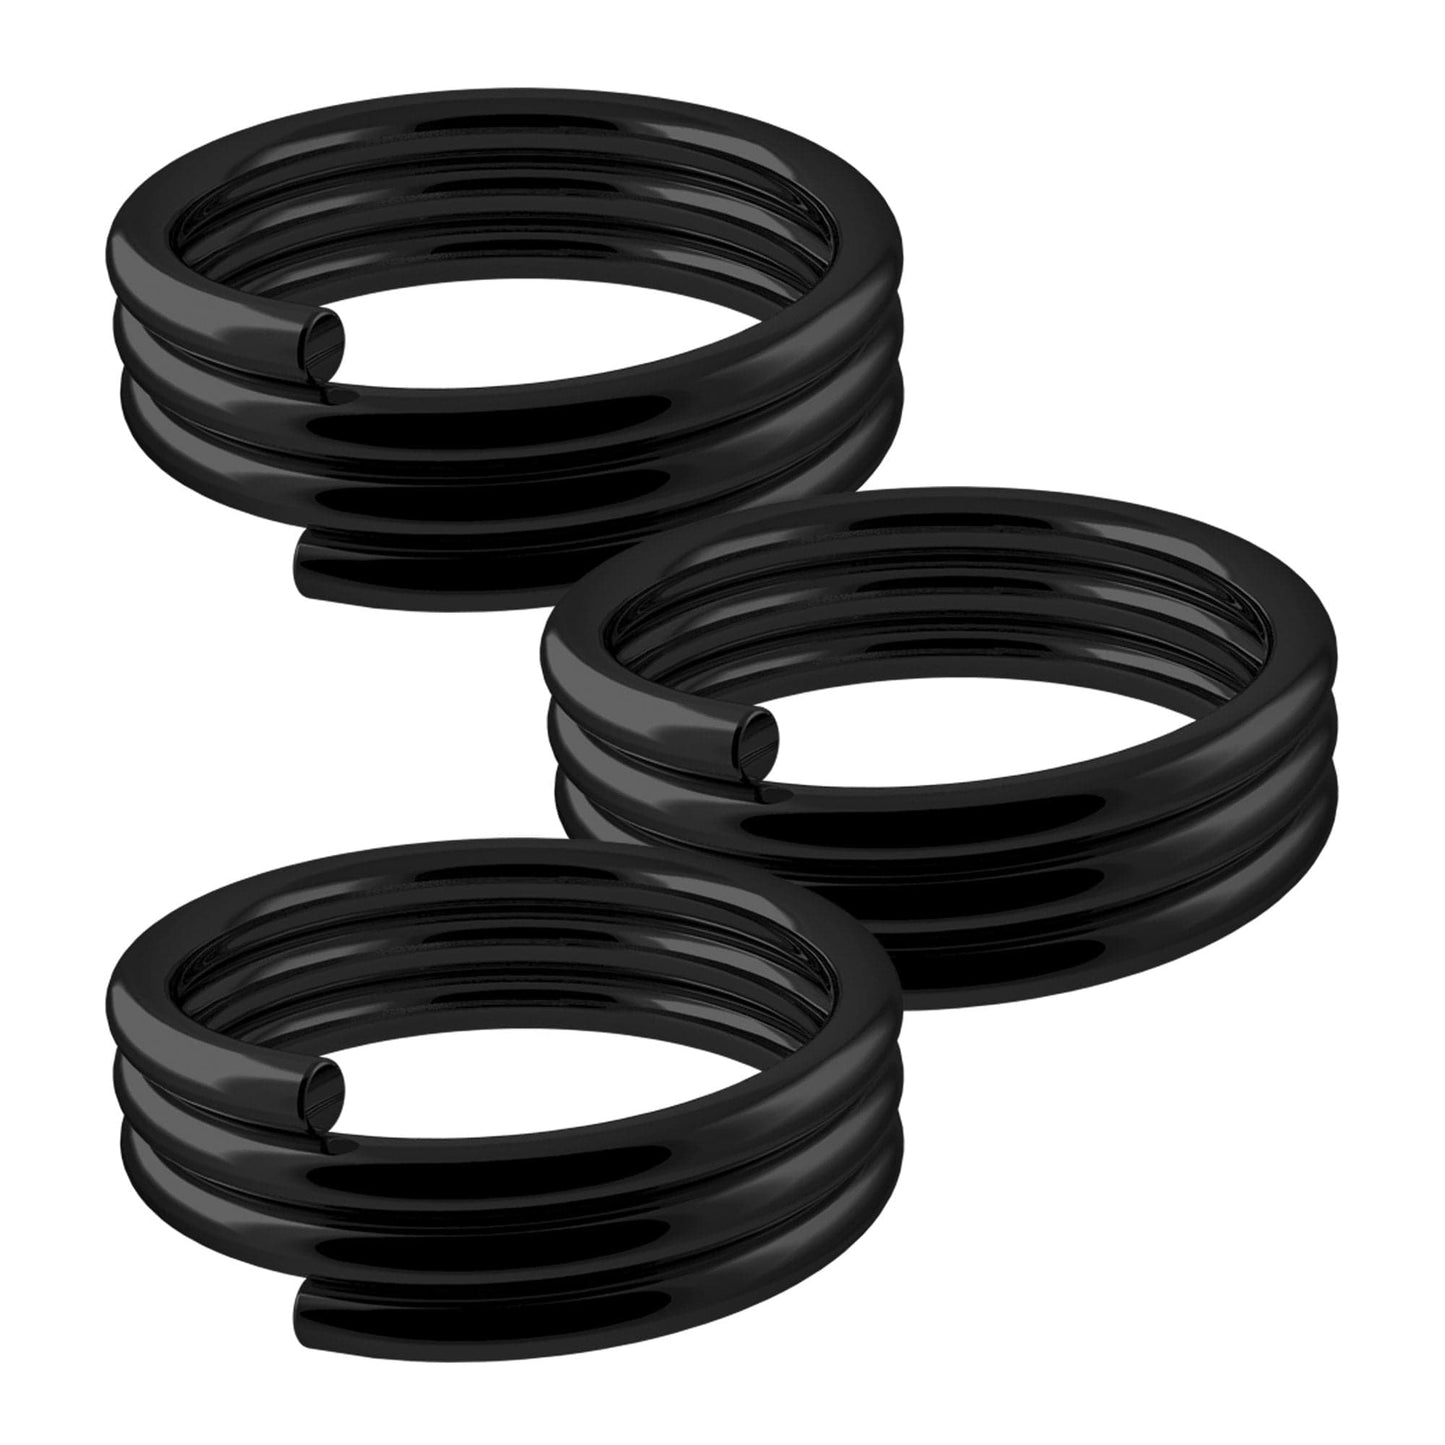 Designa Springs - for use with Nylon Shafts - 50 Sets (150) Black